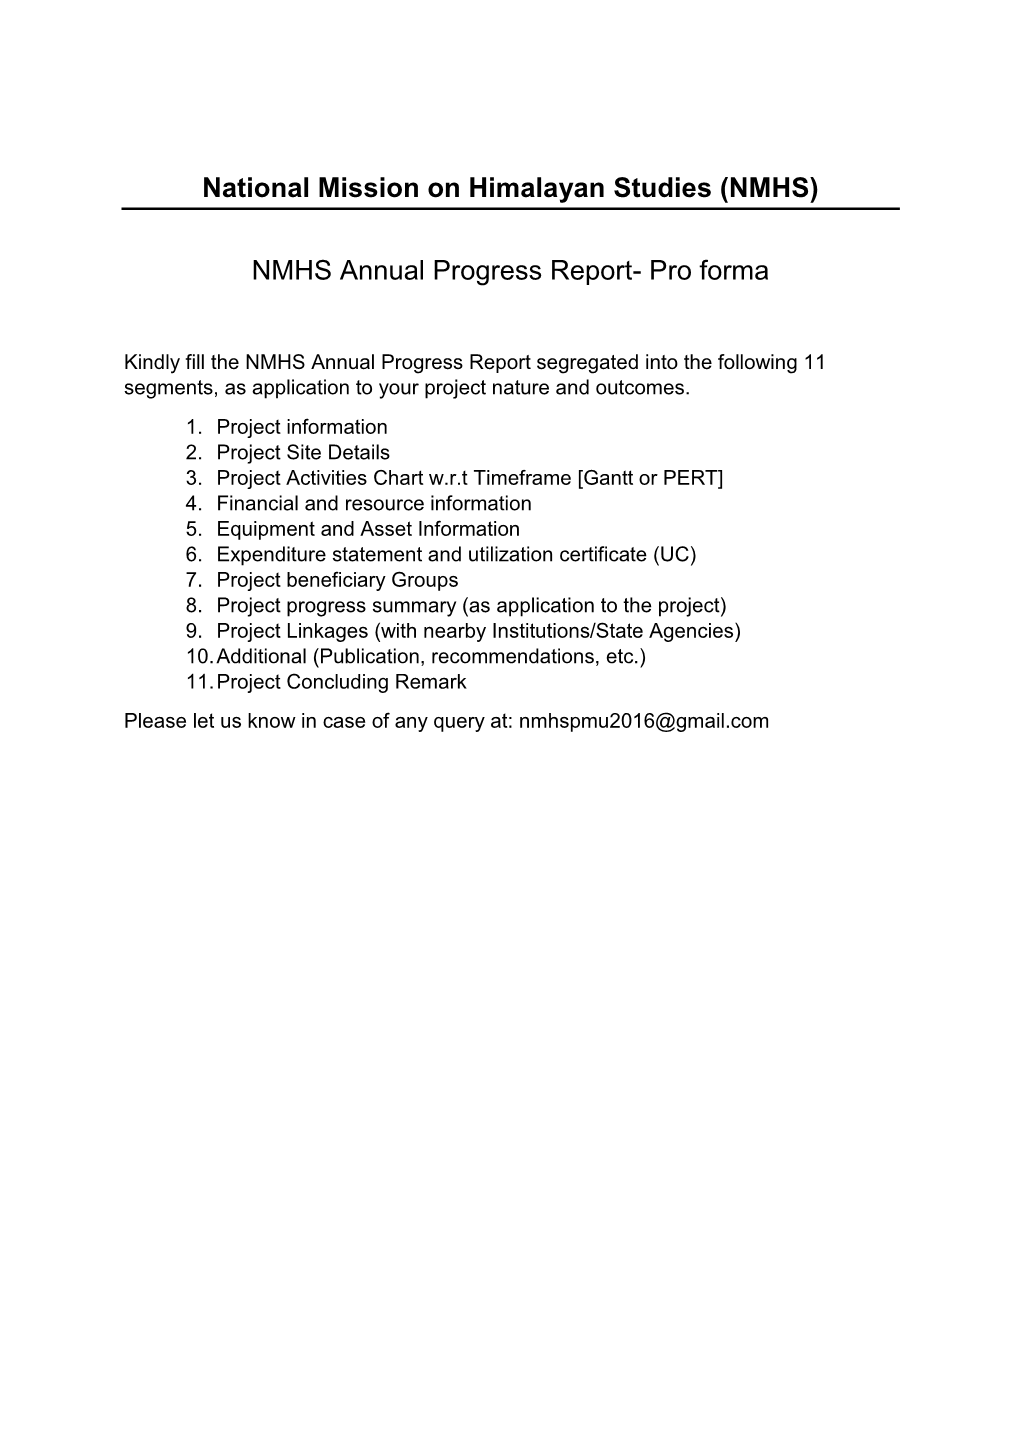 NMHS Annual Progress Report- Pro Forma